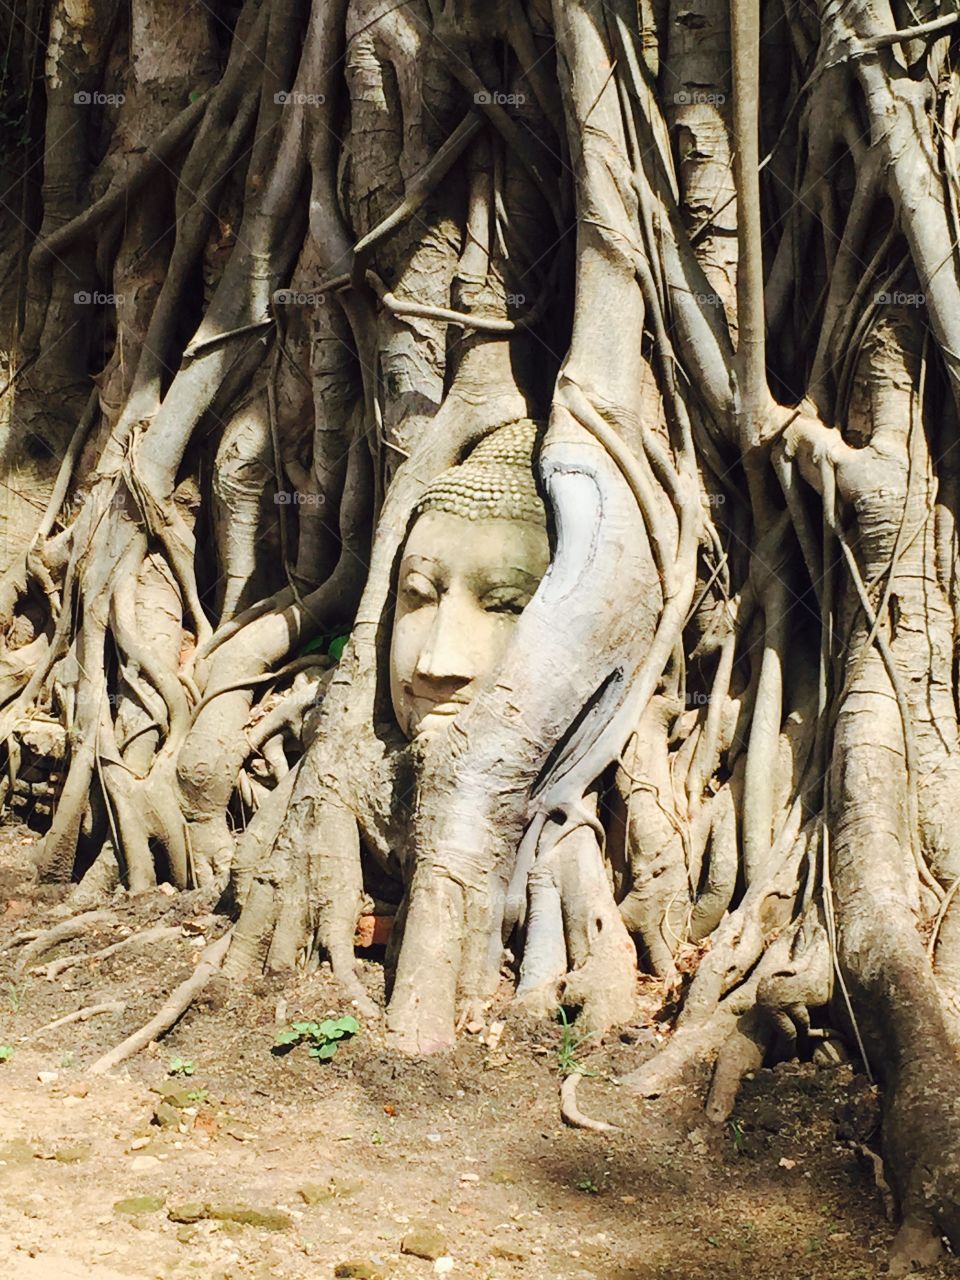 Buddha face in tree trunk